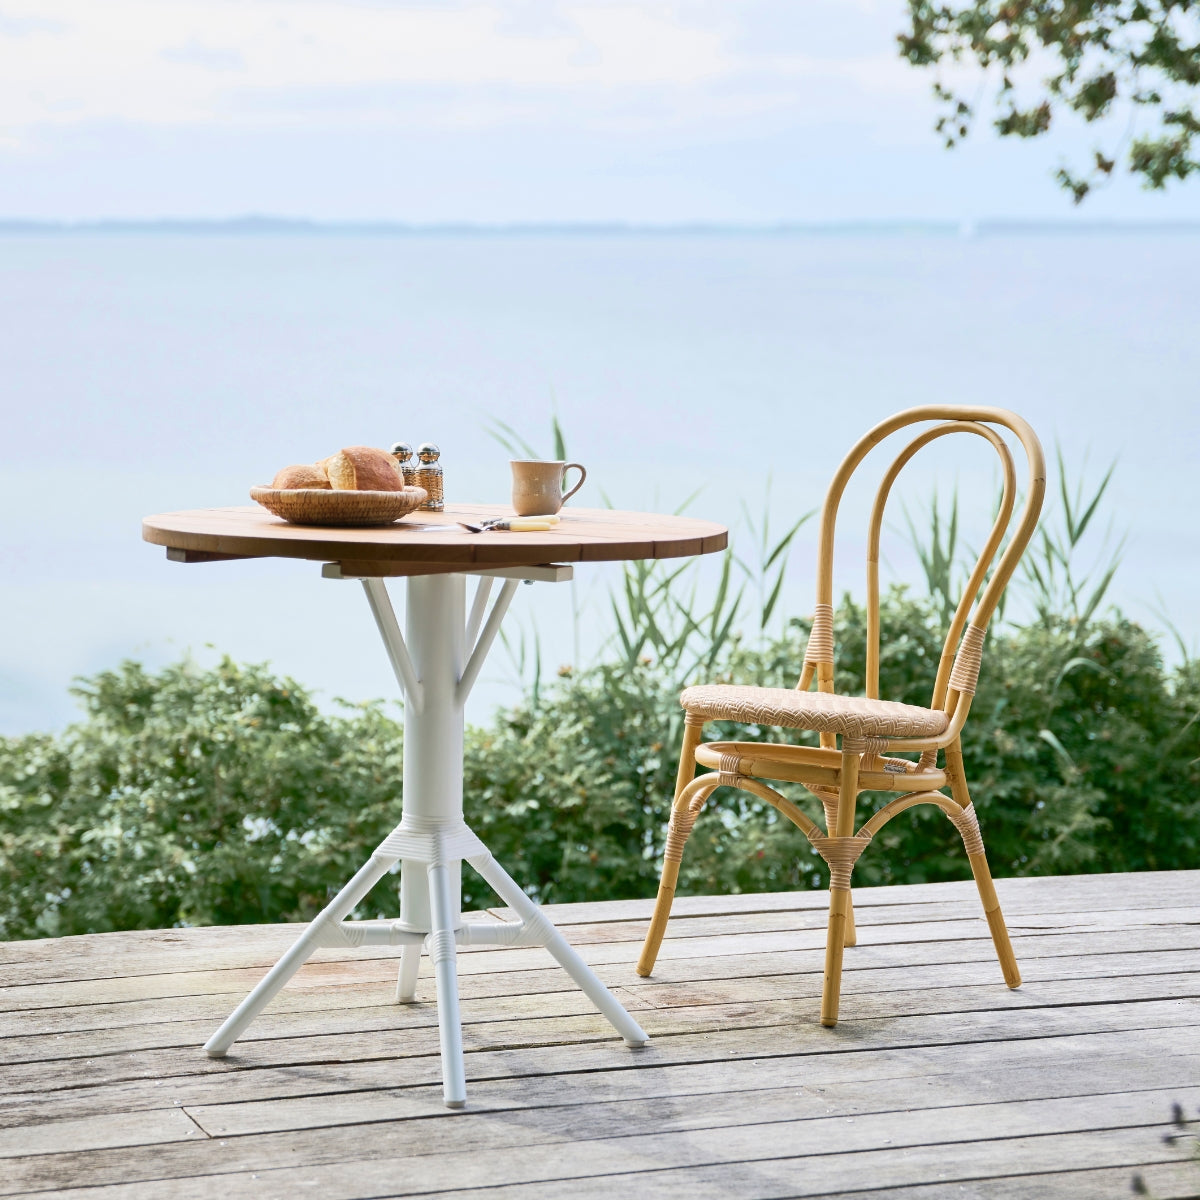 Sika-Design | Nicole Rundt Cafébord - Outdoor